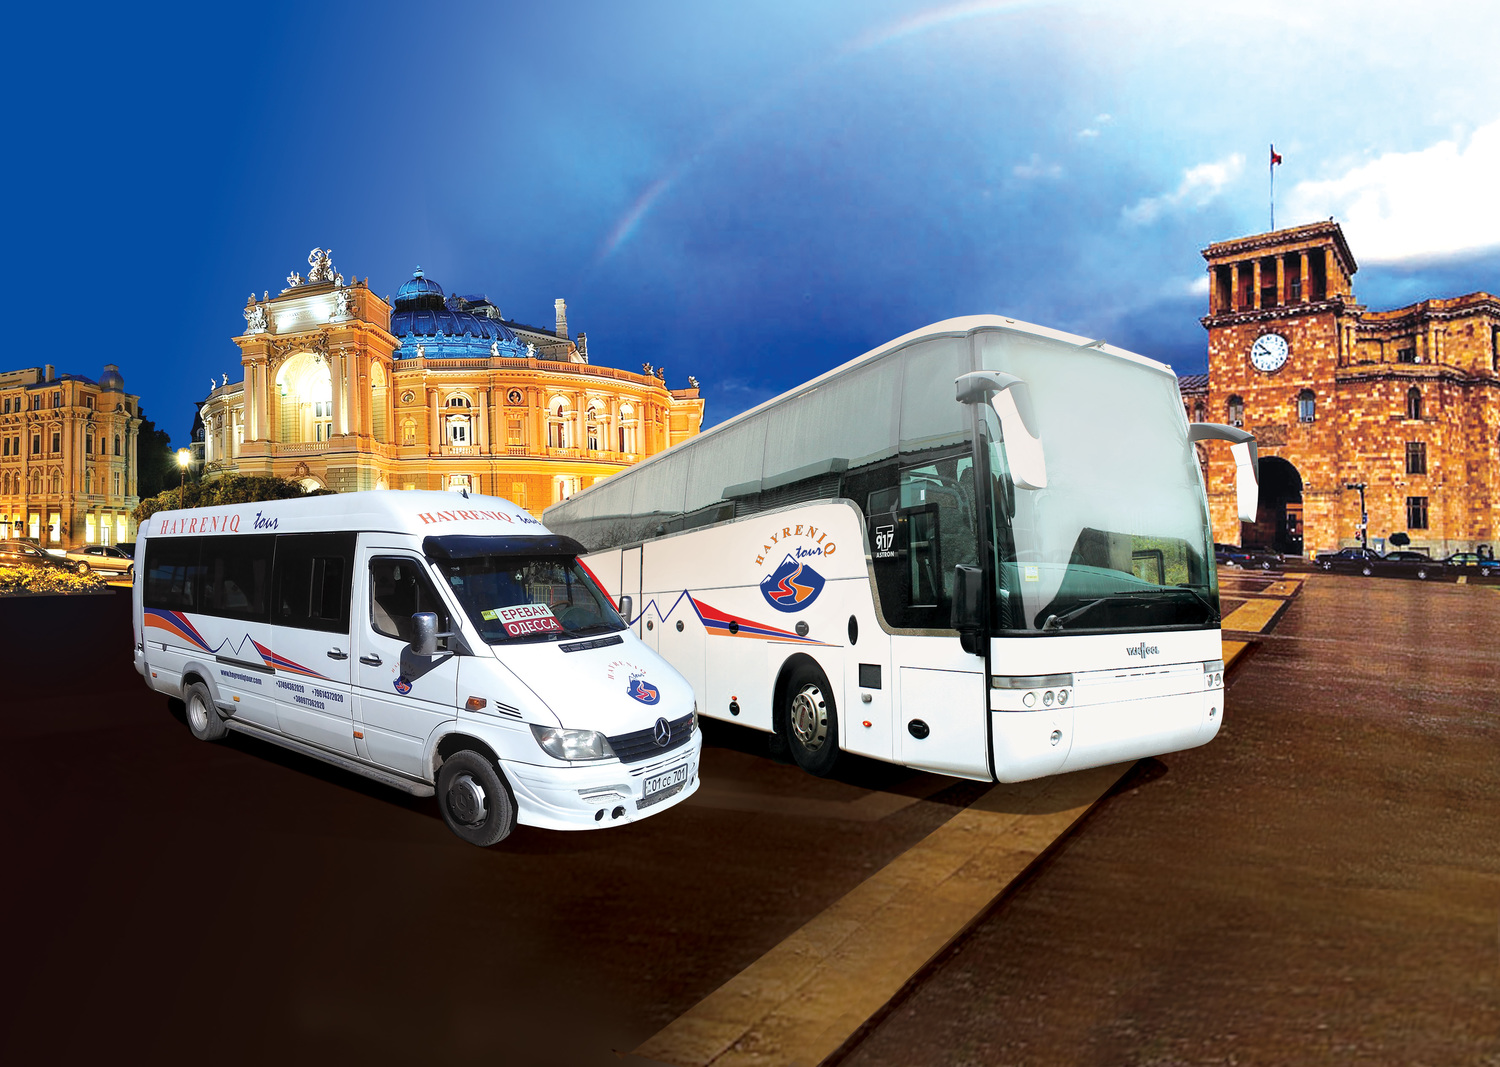 Все автобусы города <span style="font-weight: bold;">Крымск</span>